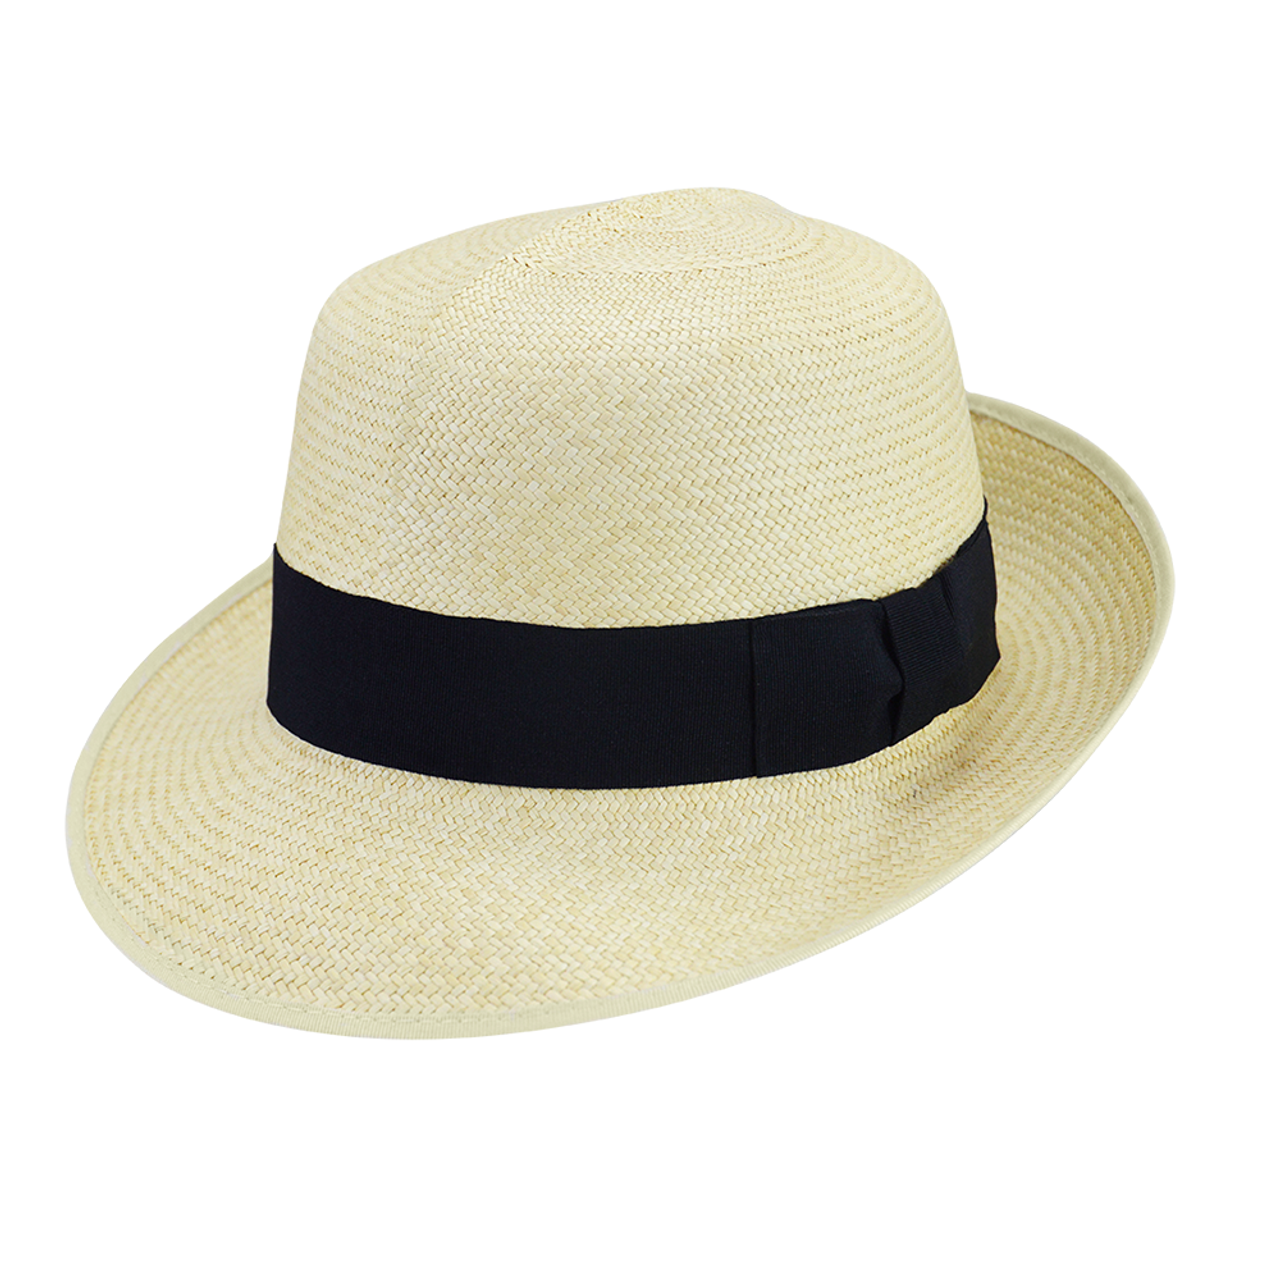 Folder Panama - Cuenca 3/5 in Natural - The Panama Hat Company